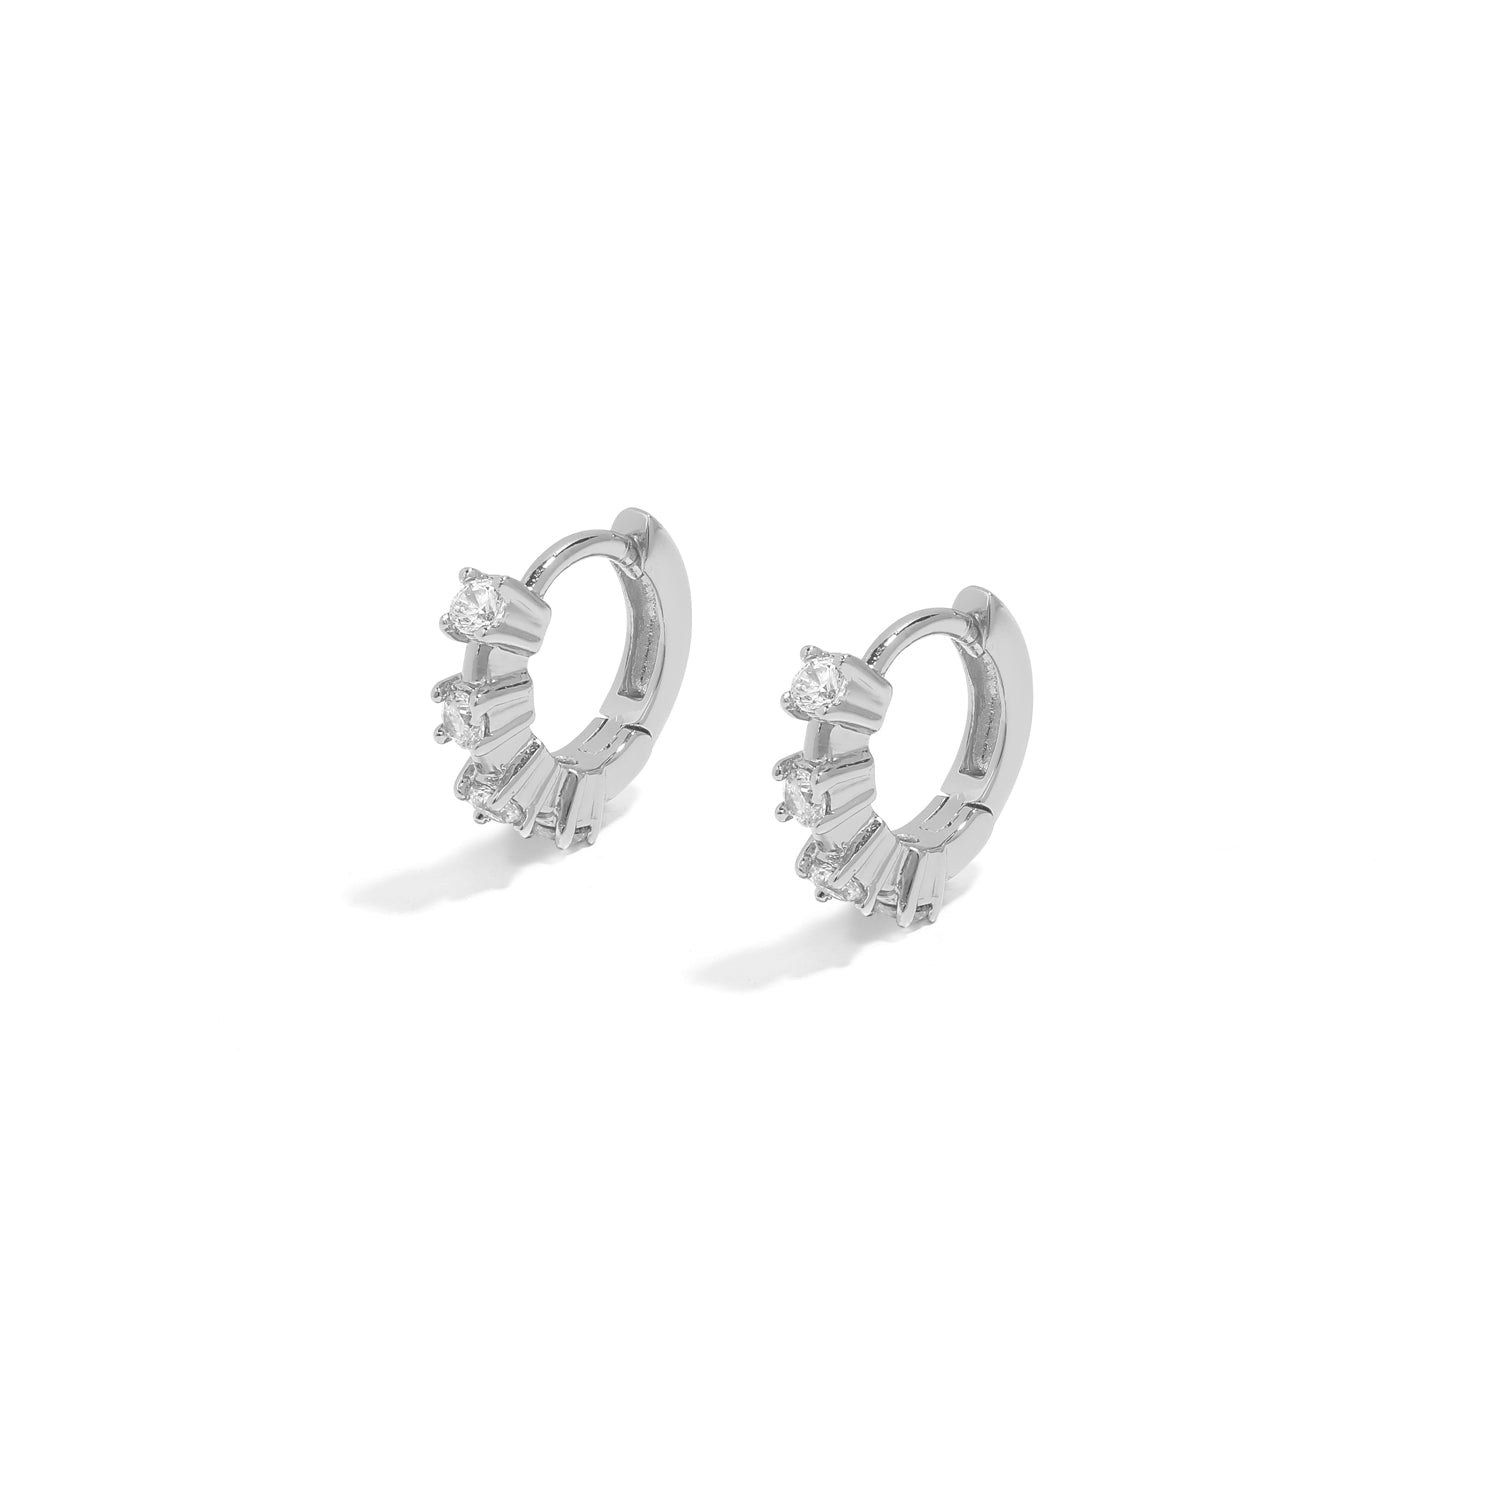 Elegant and statement huggies. Silver hoop earrings set with cubic zirconia stones.